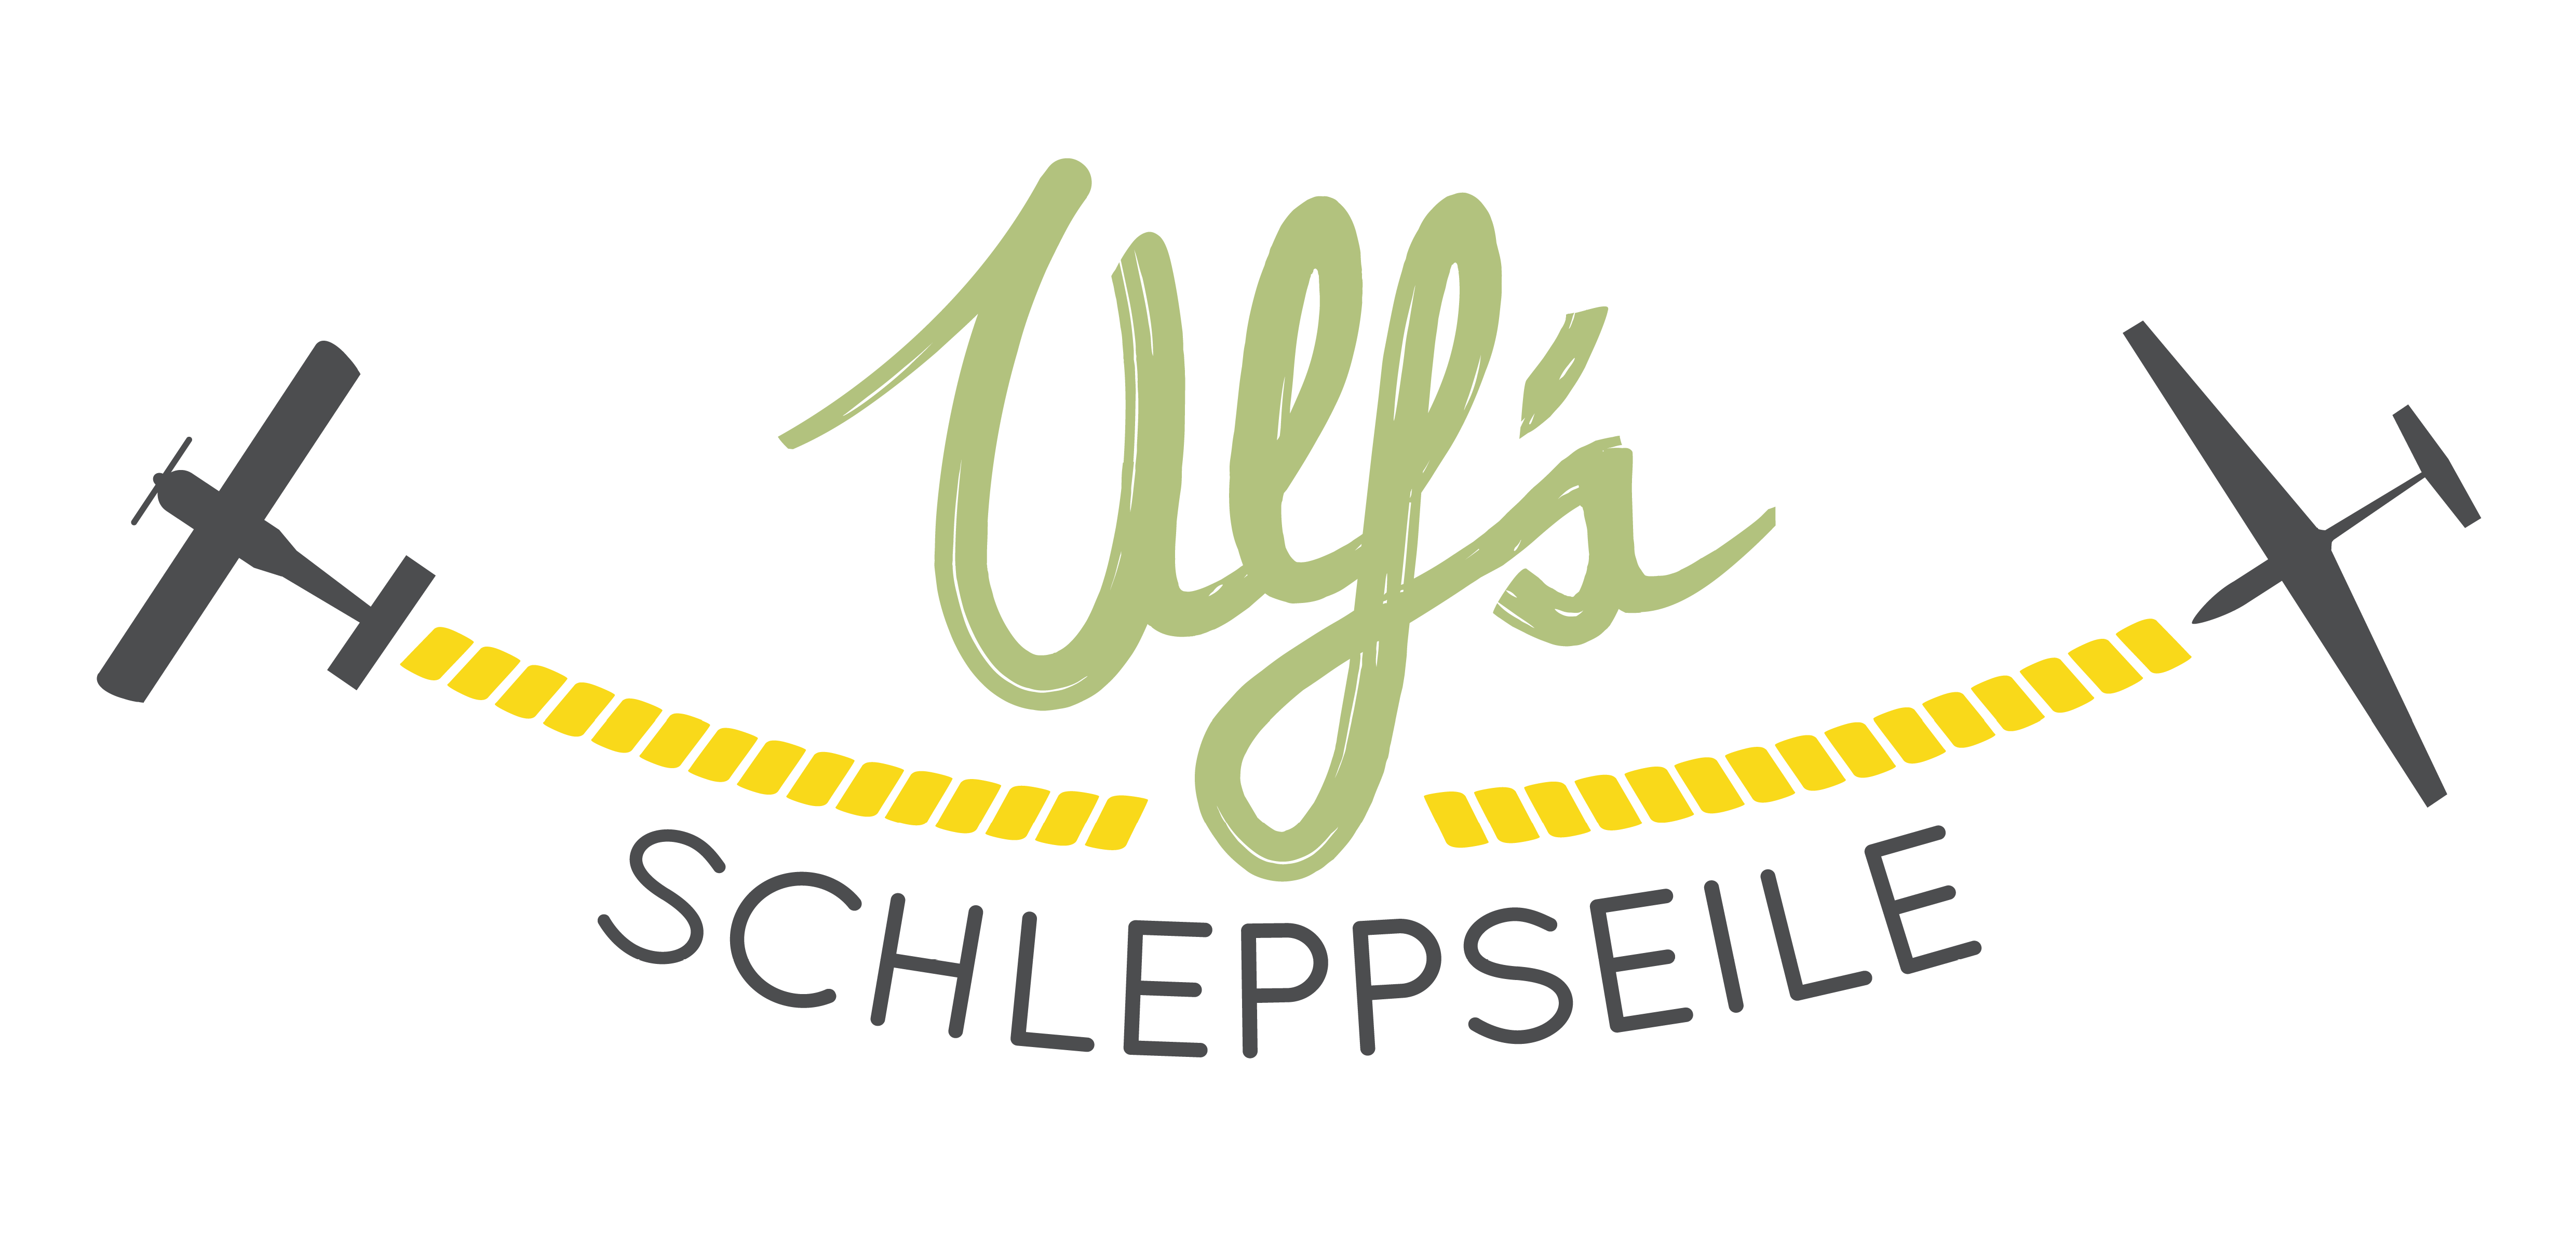 Ulf's Schleppseile